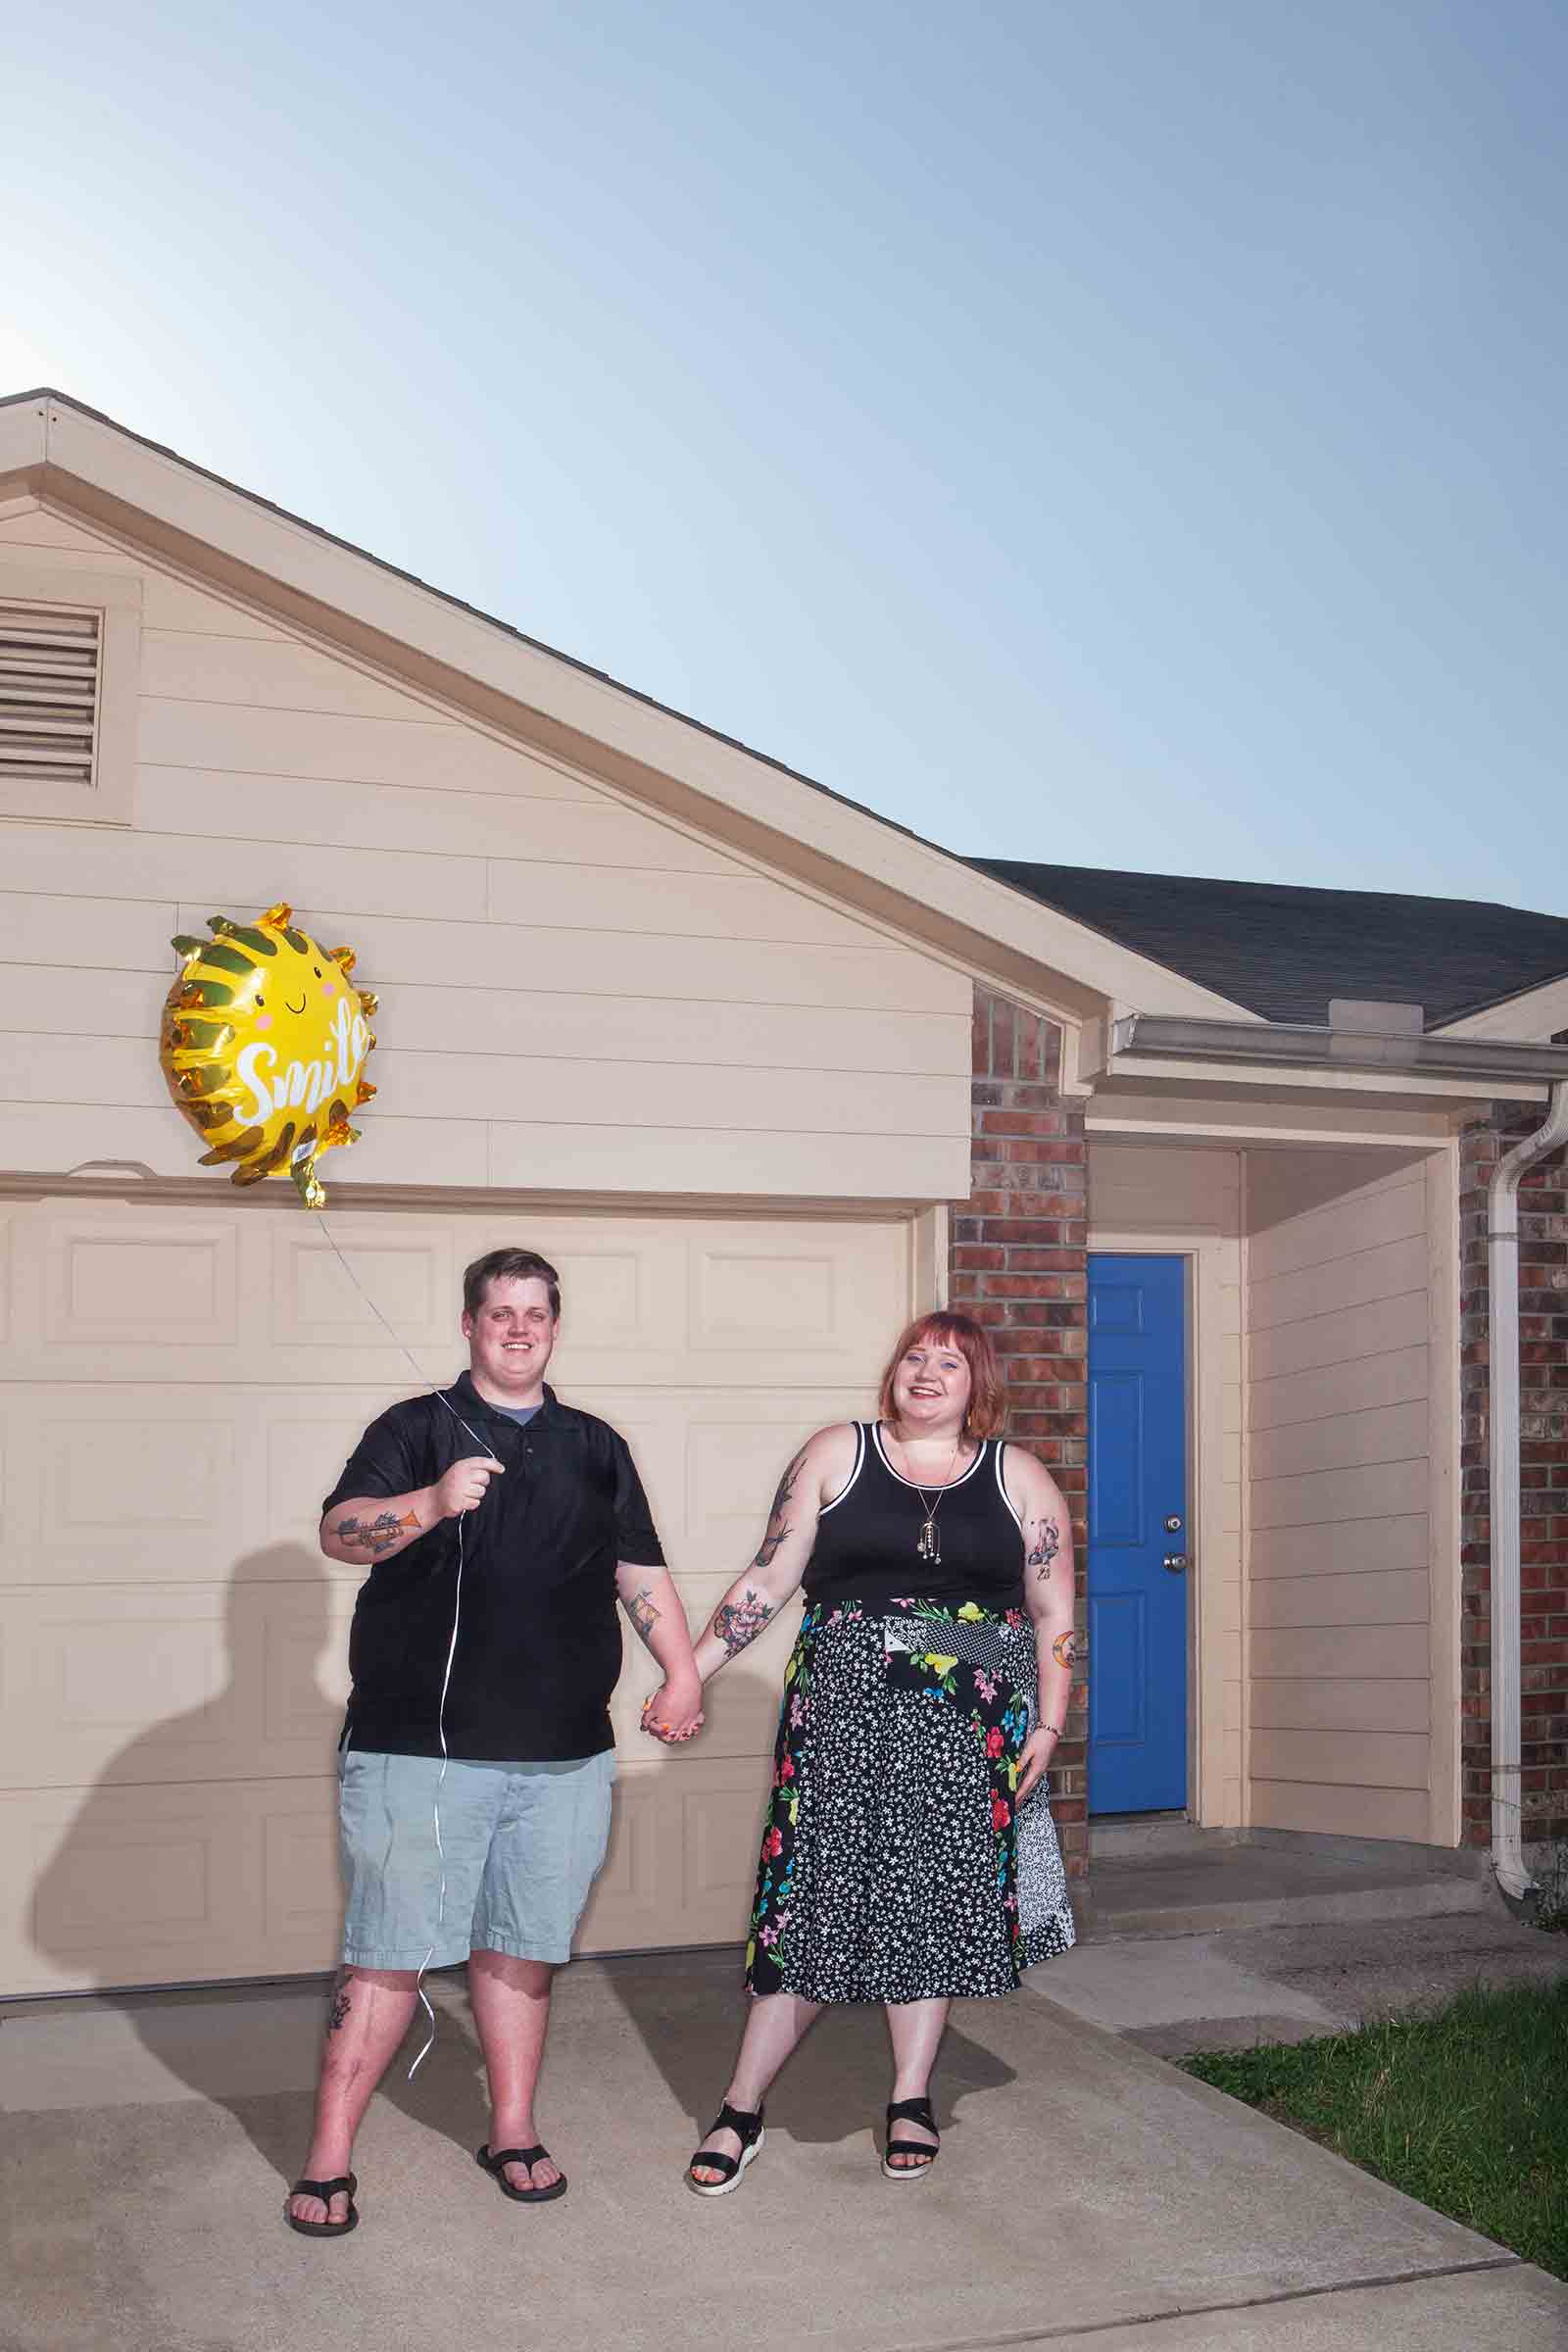 Sarah and John LeNoir photographed at their new home, 137 Sawgrass Circle in Kyle, TX 787640 on Sunday  May 22. Photographer : Brent Humphreys